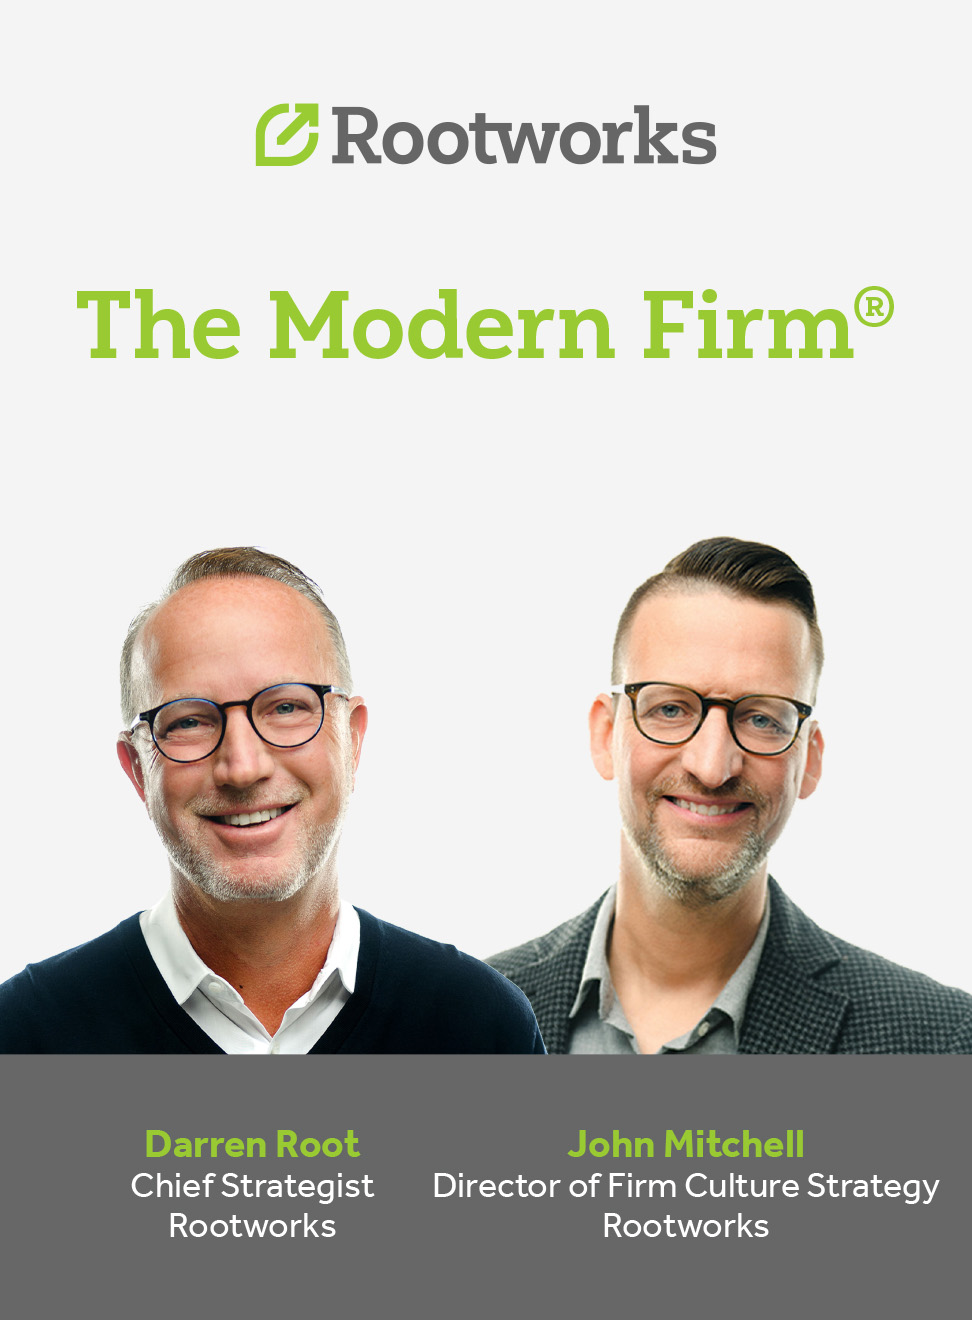 The modern firm webinar